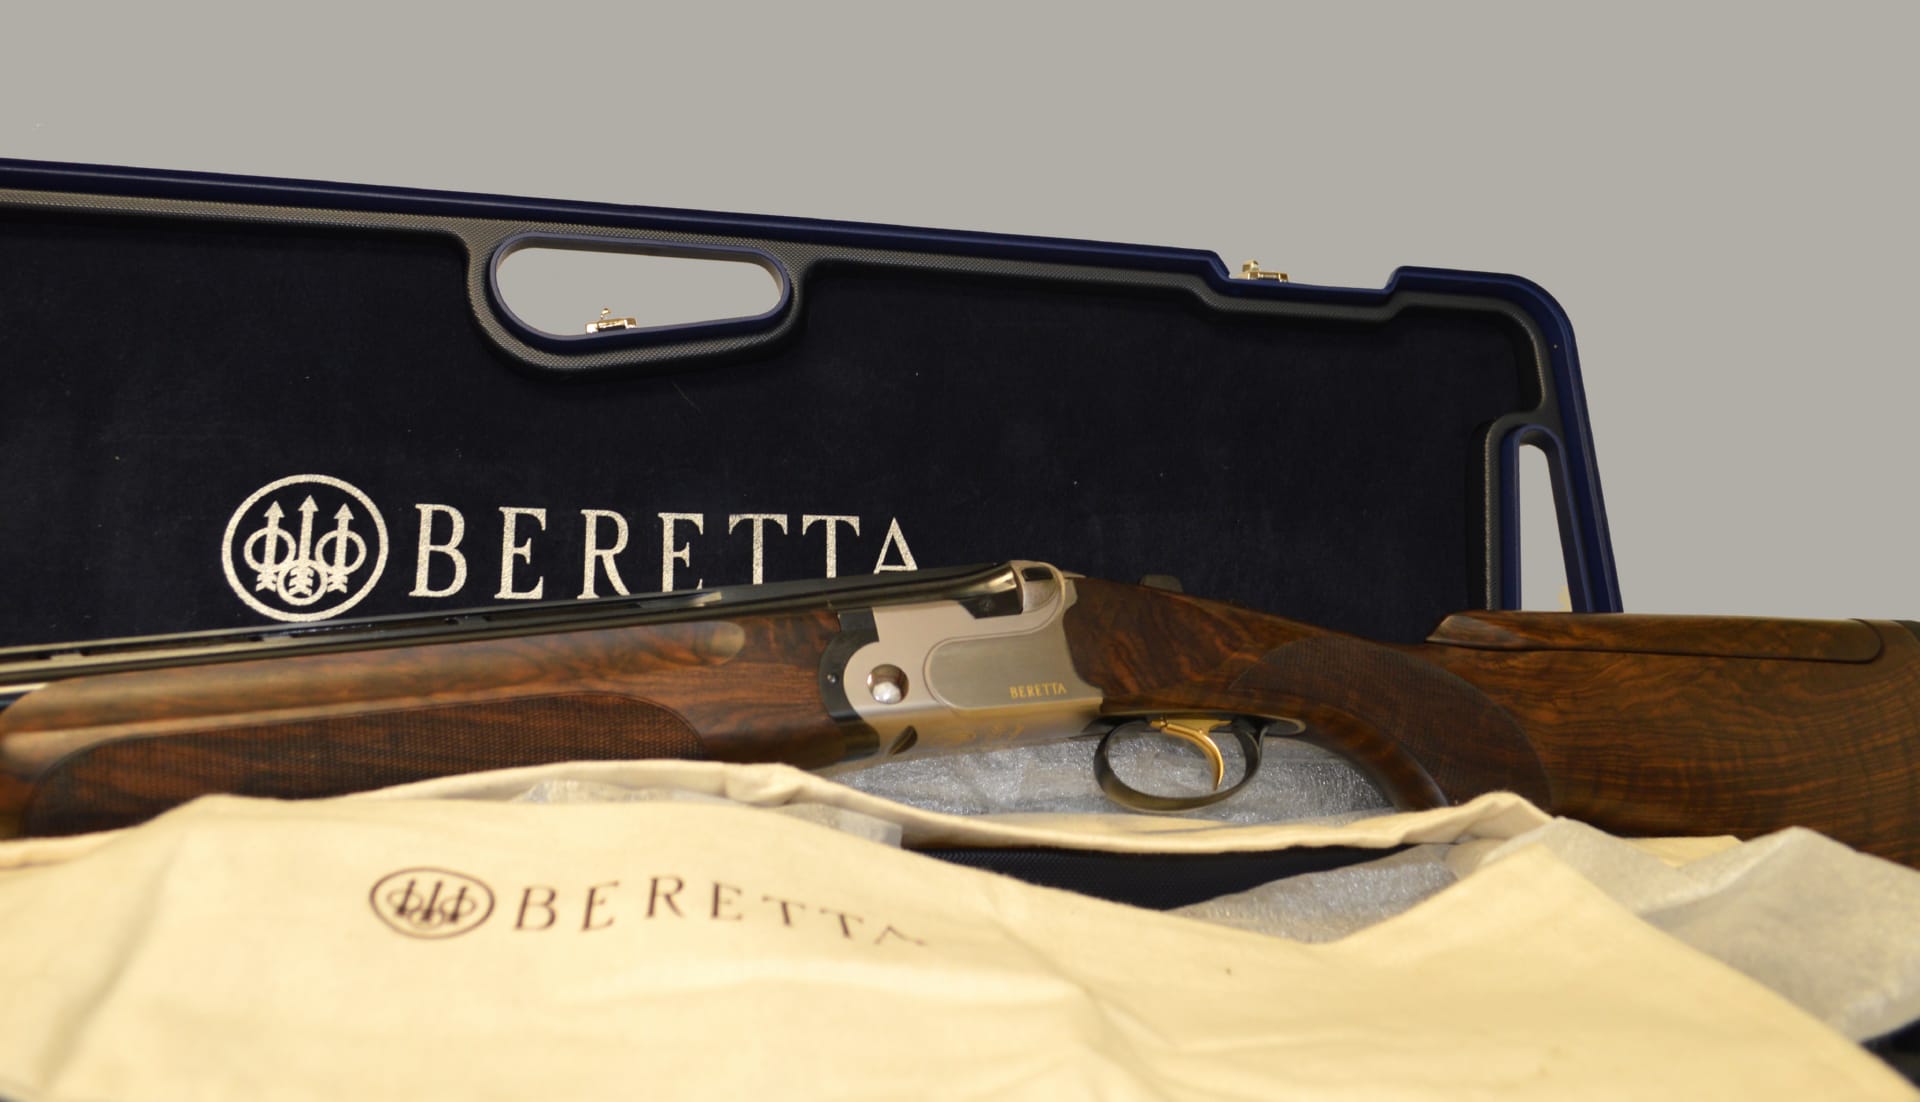 Beretta Shotgun at 320 x 480 iPhone size wallpapers HD quality